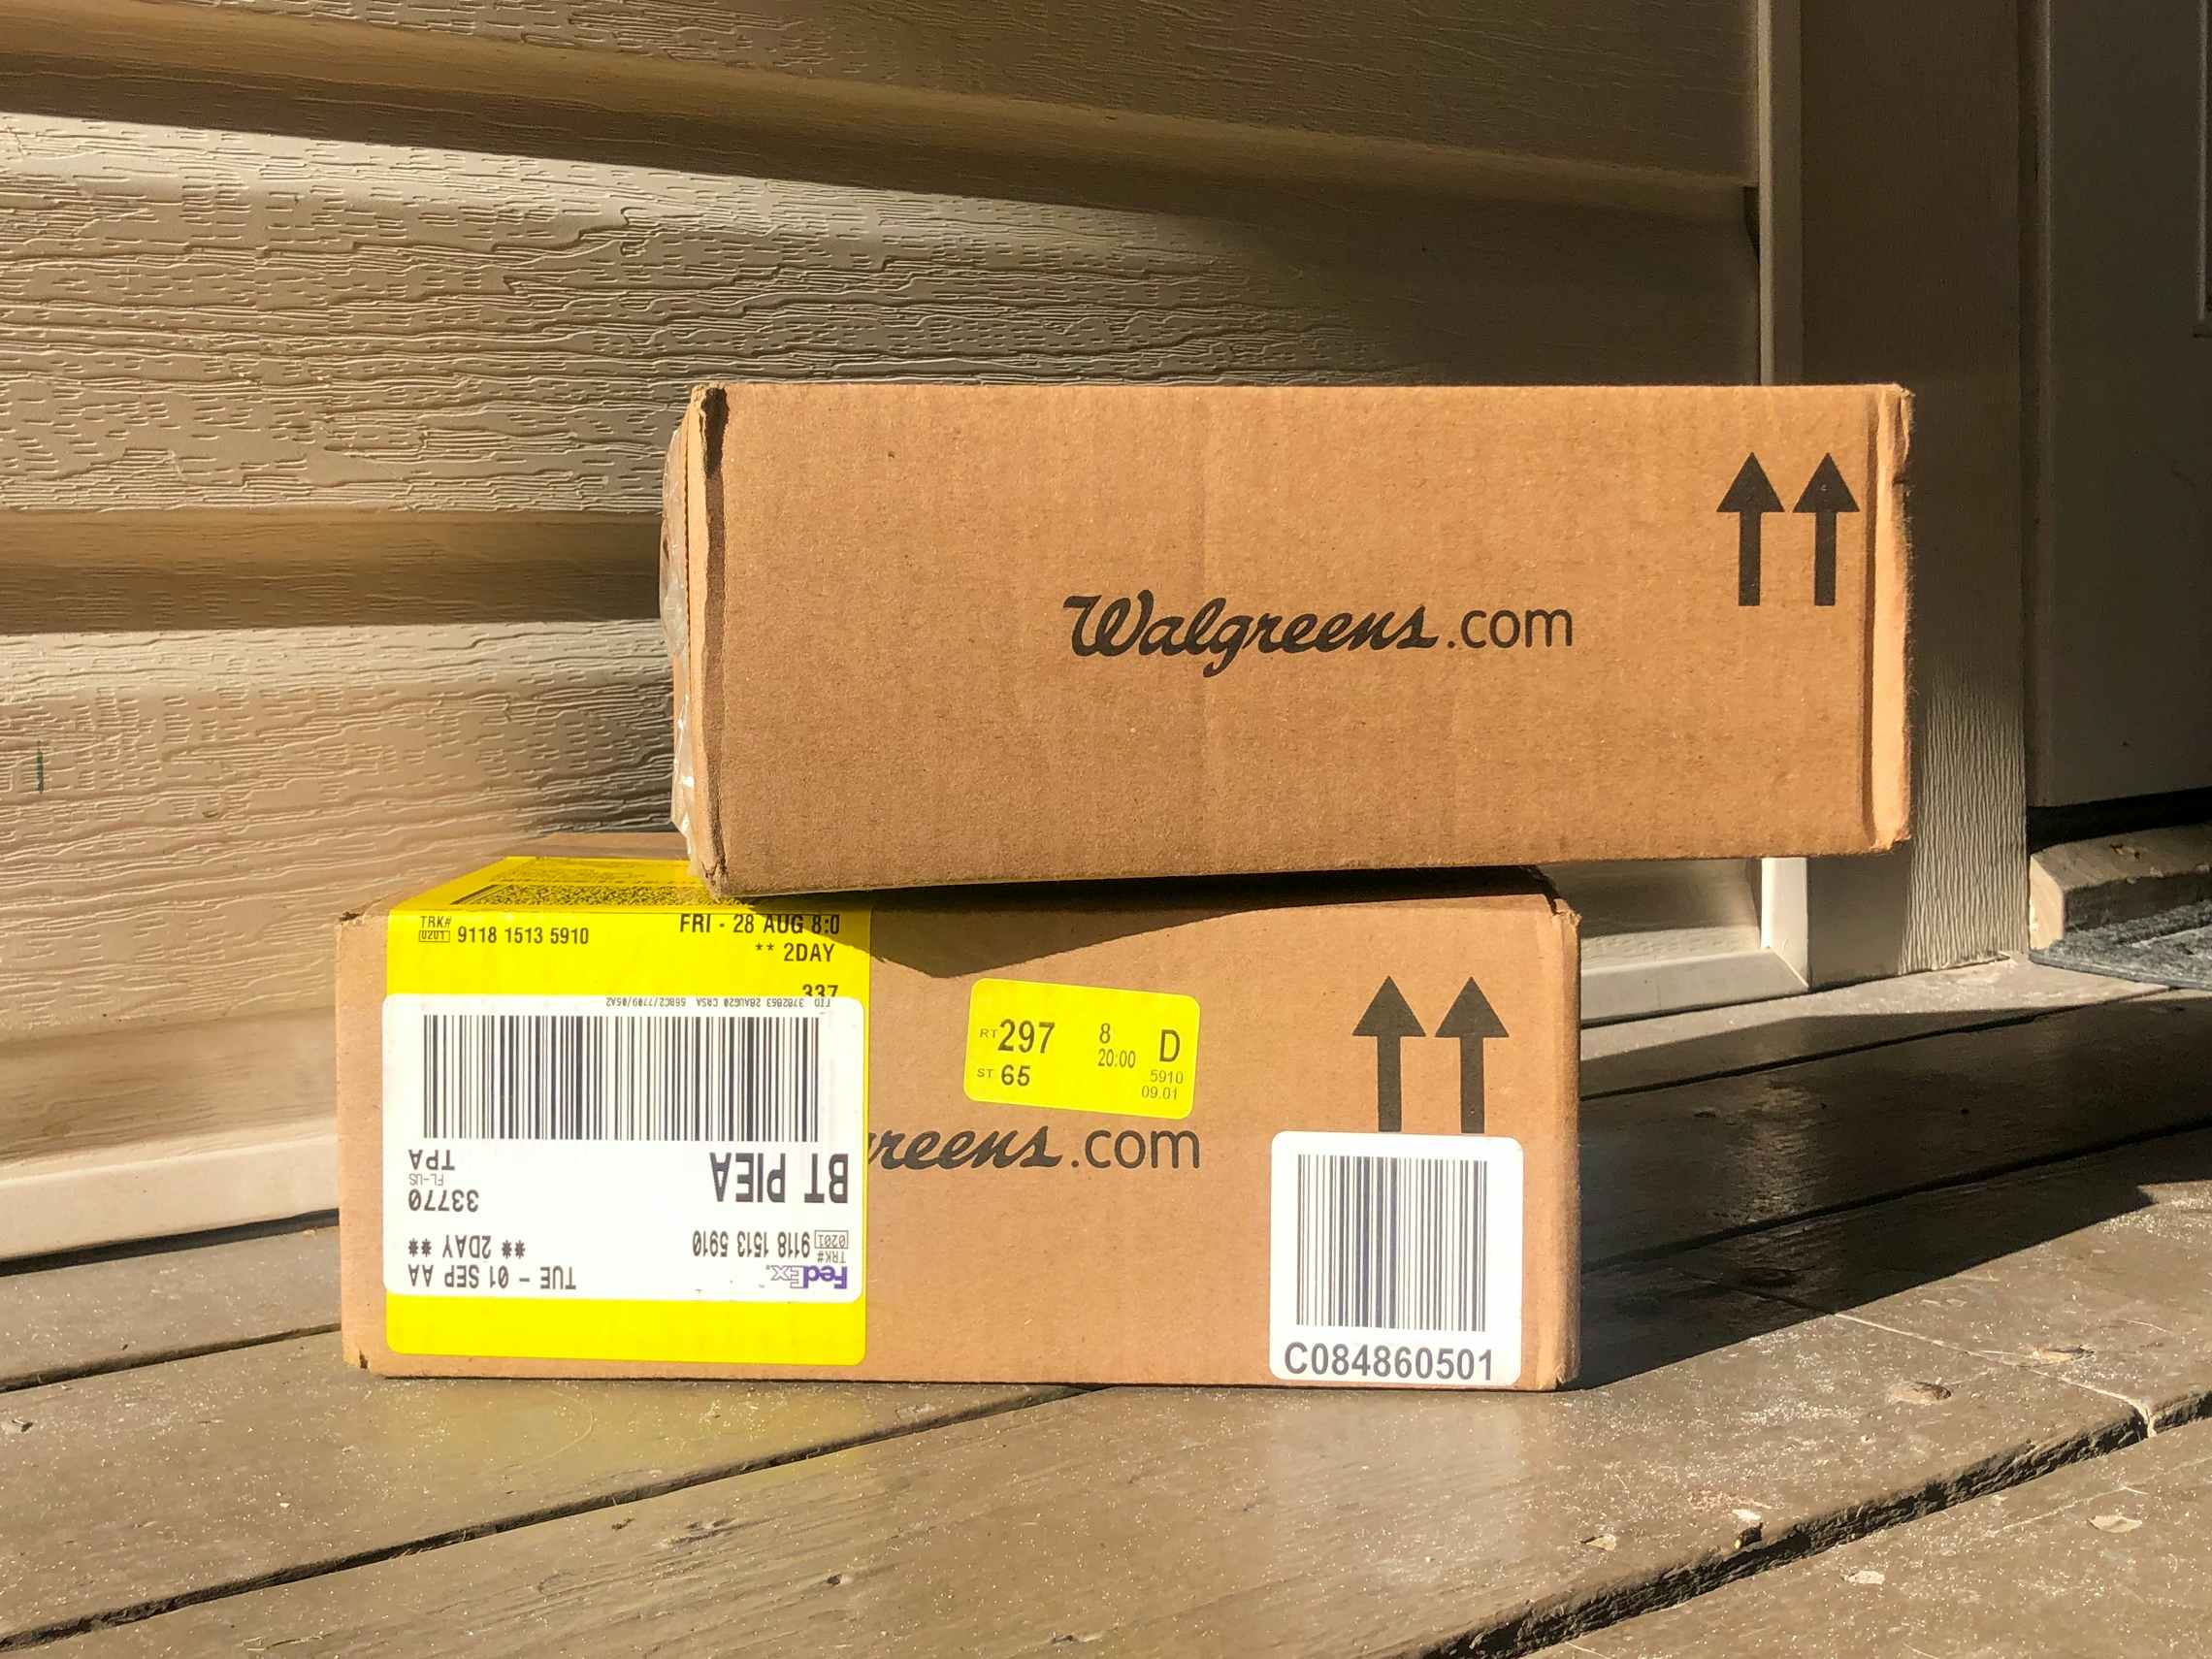 walgreens box